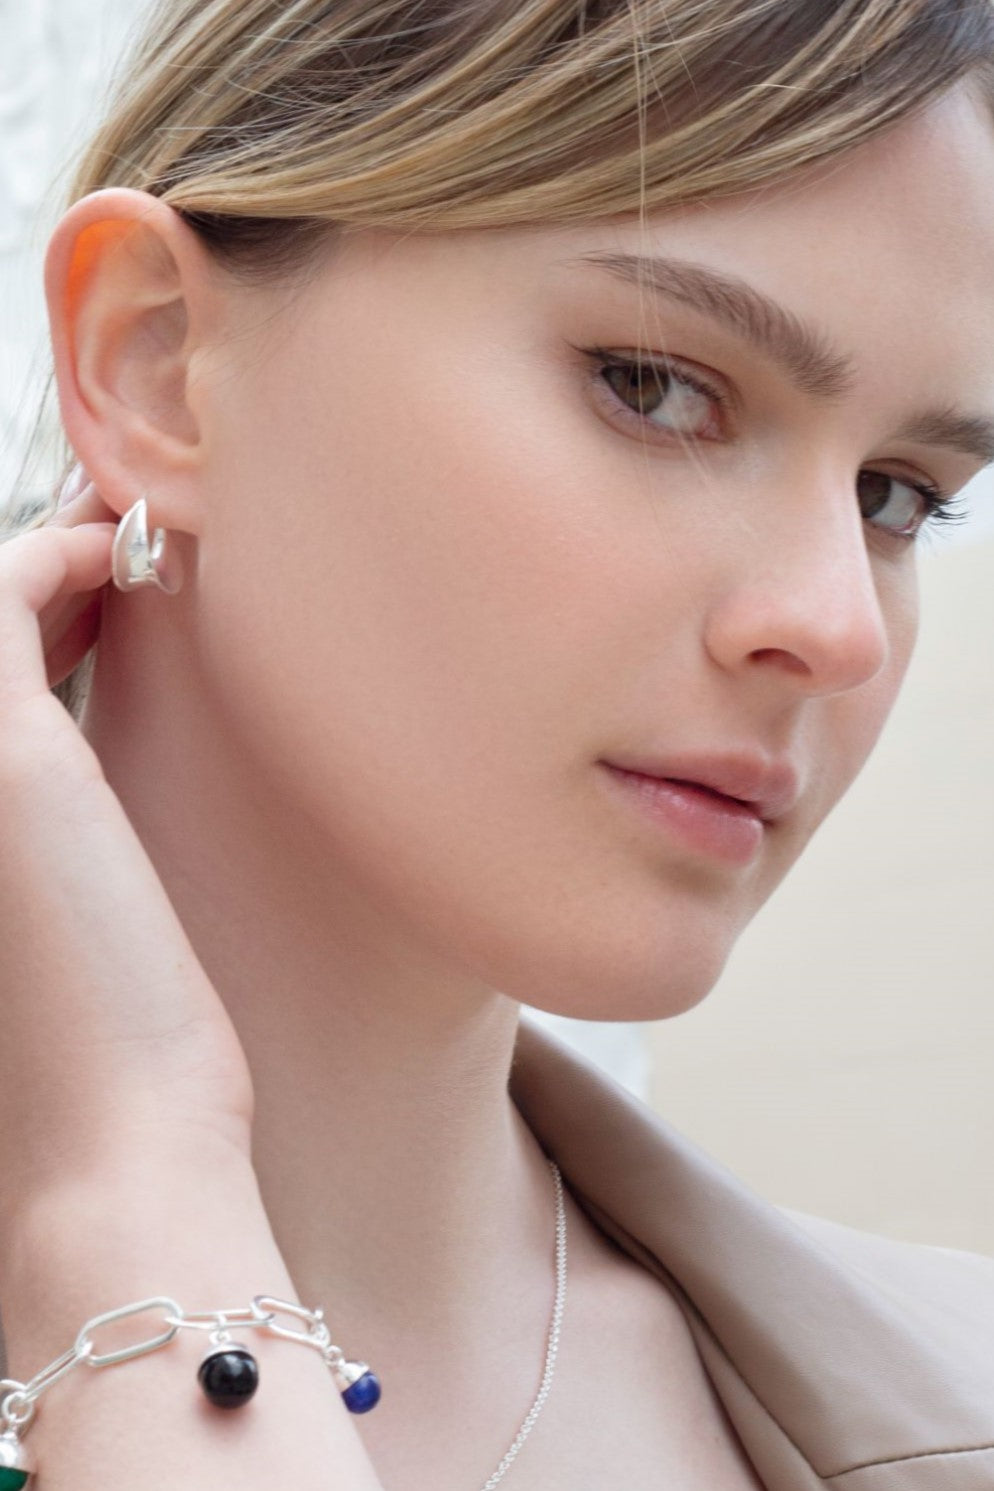 Embrace Simplicity Silver Hoop Earrings